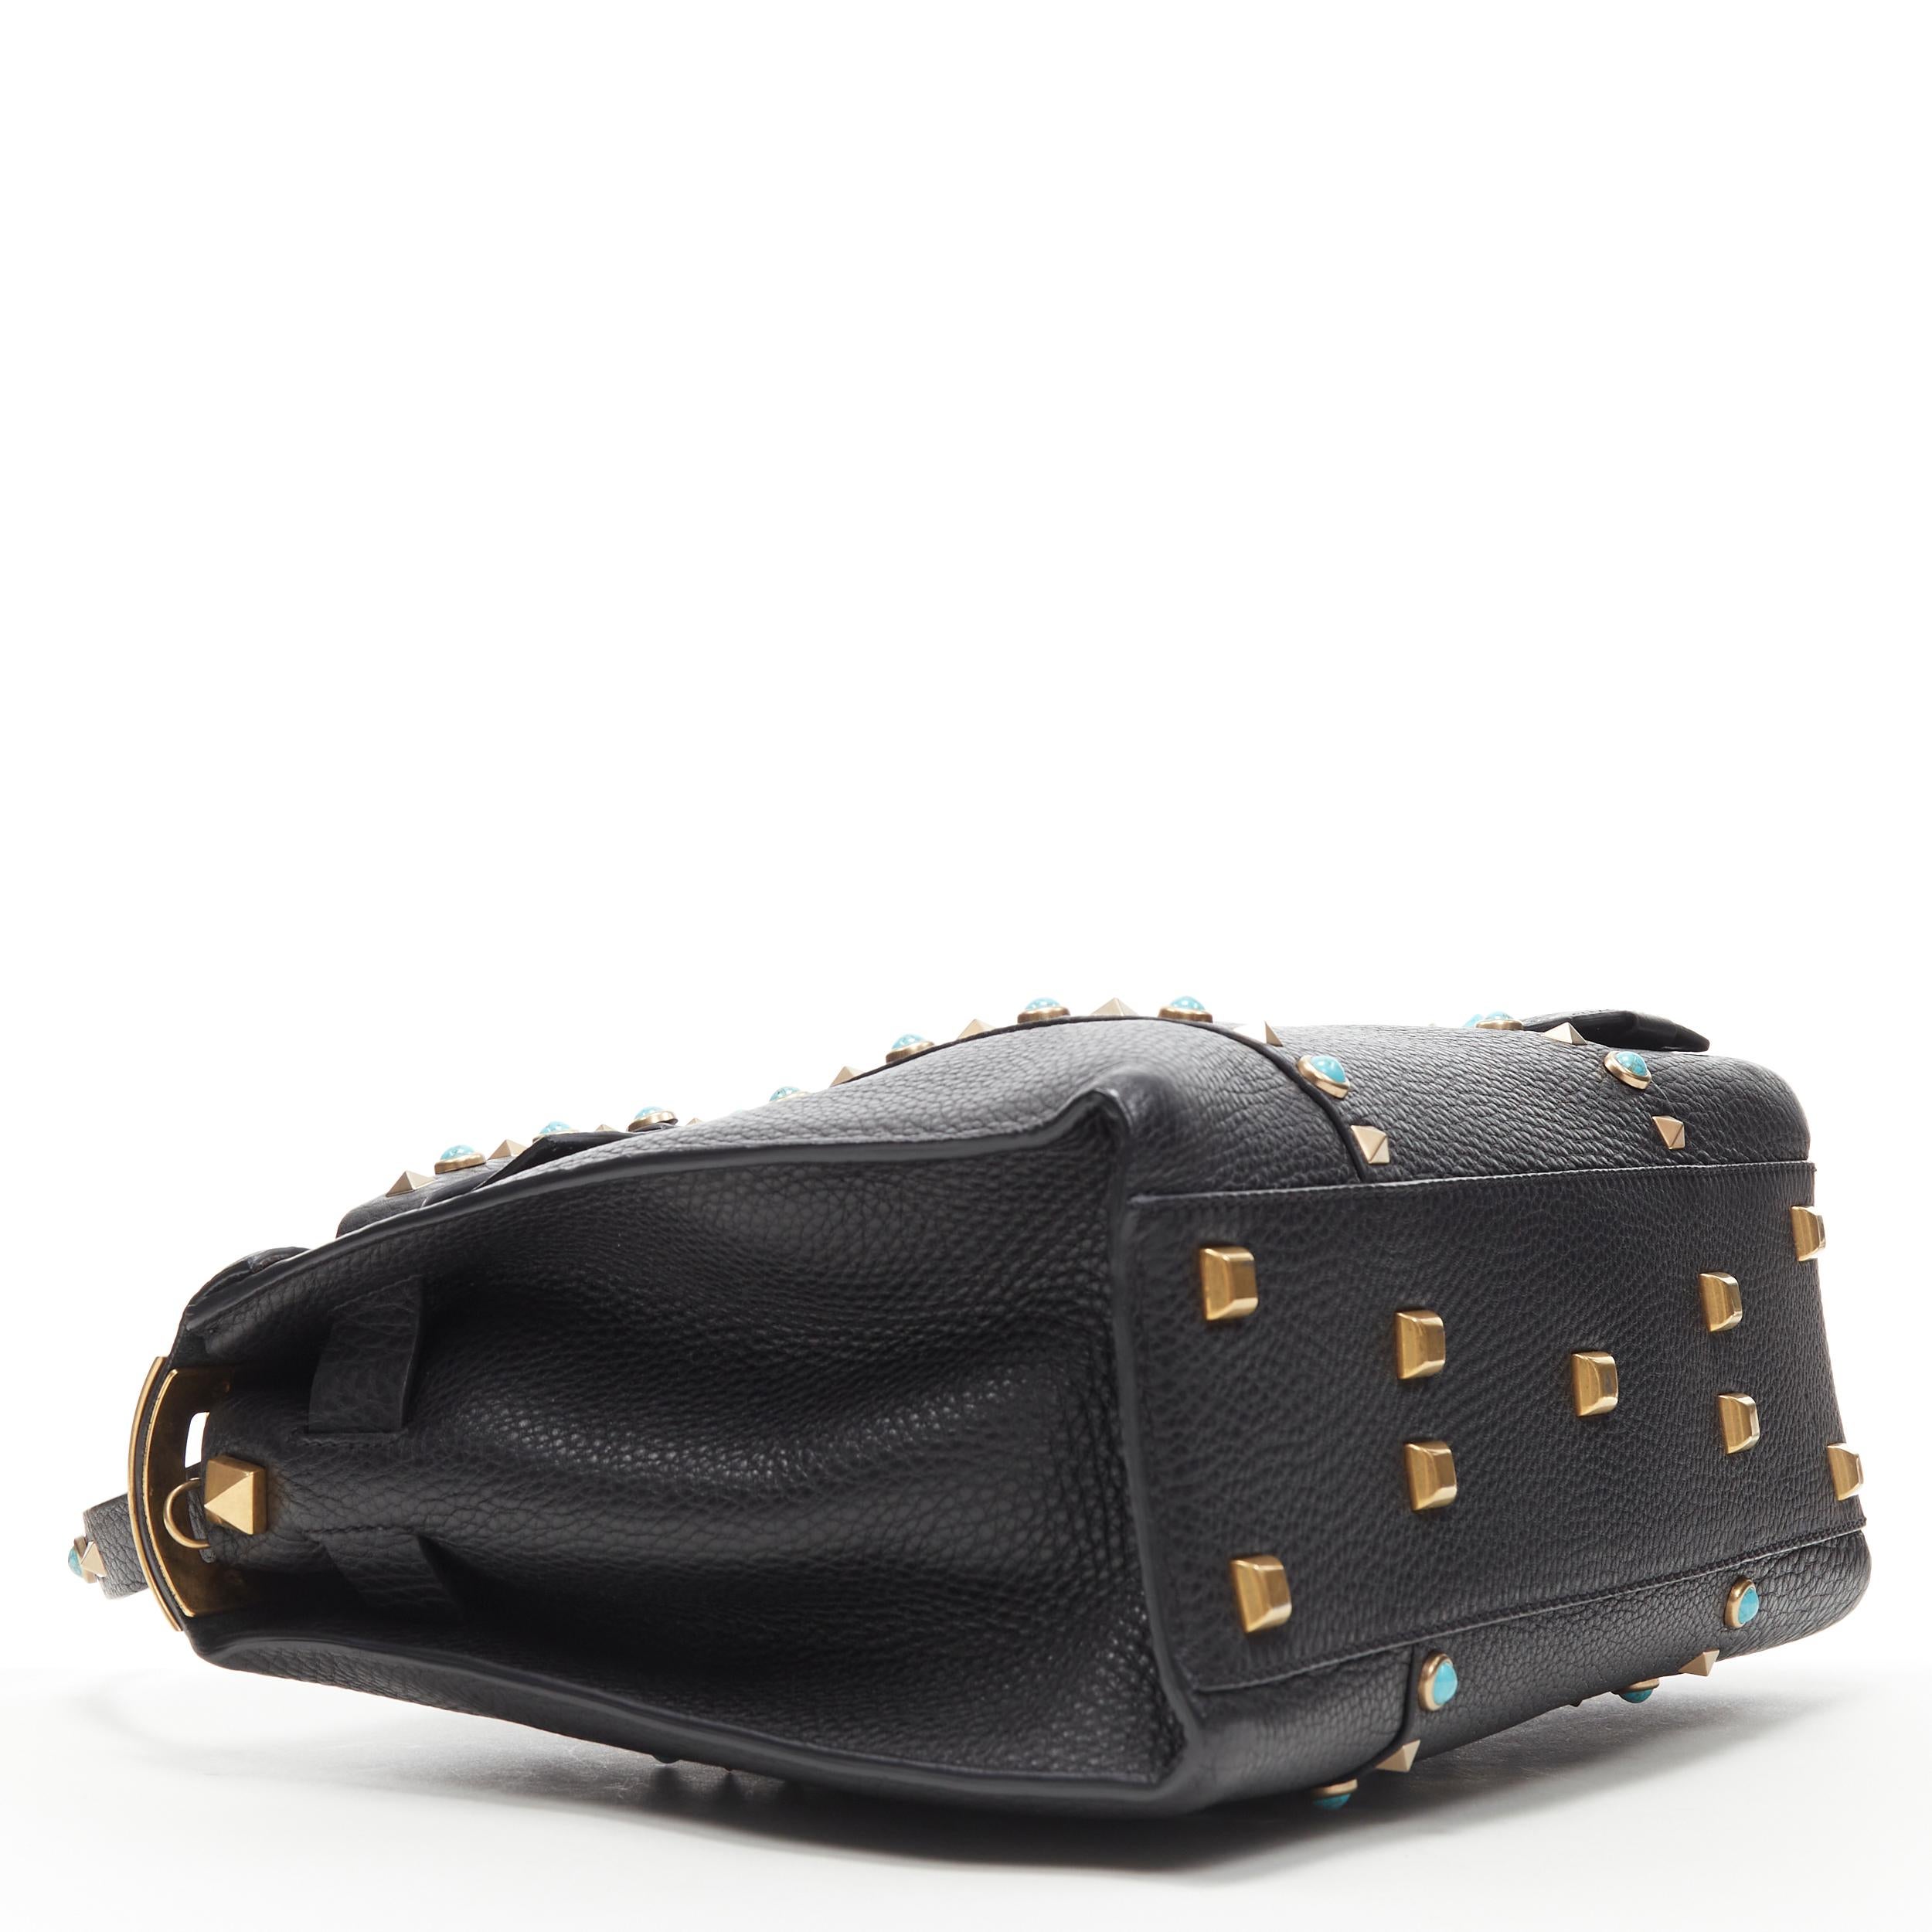 Women's new VALENTINO black pebble leather turquoise stone Rockstud satchel shoulder bag